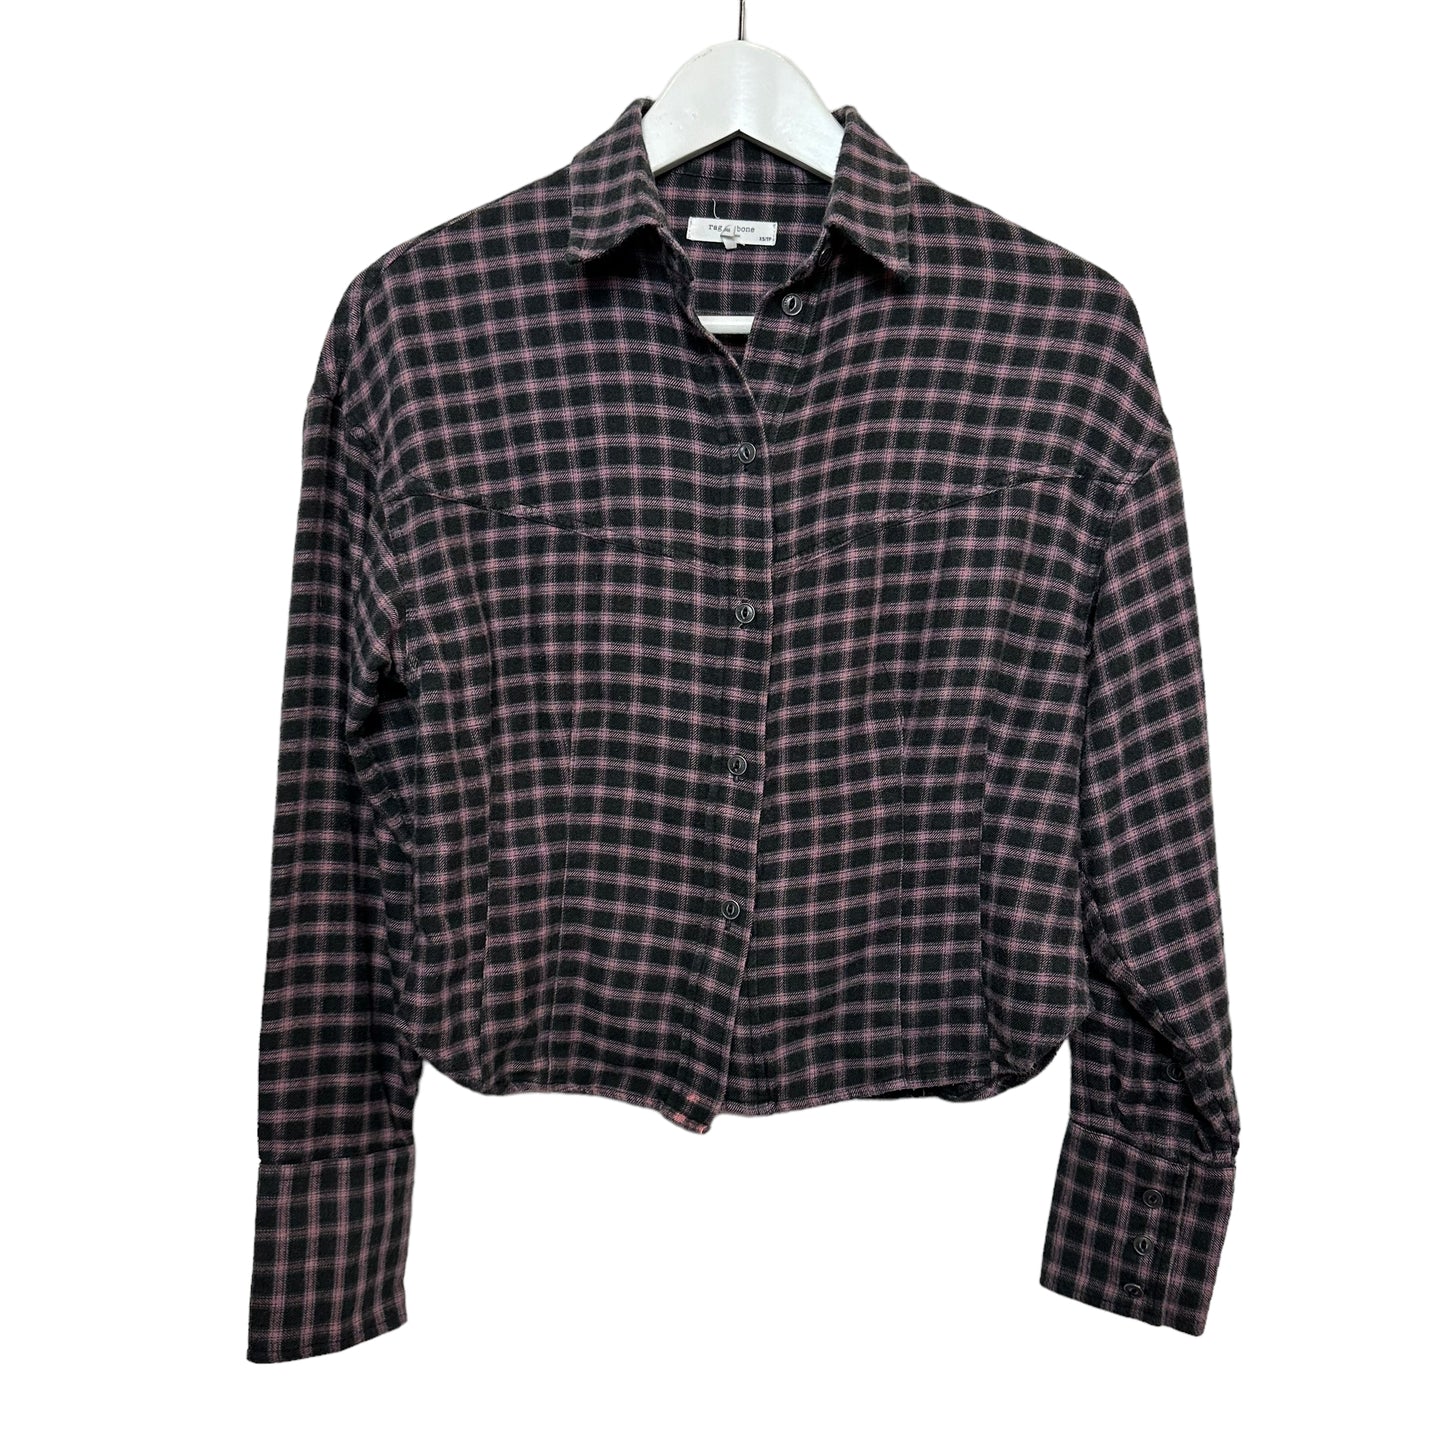 Rag & Bone Iris Plaid Flannel Shirt Black Pink Collared Button Up XS